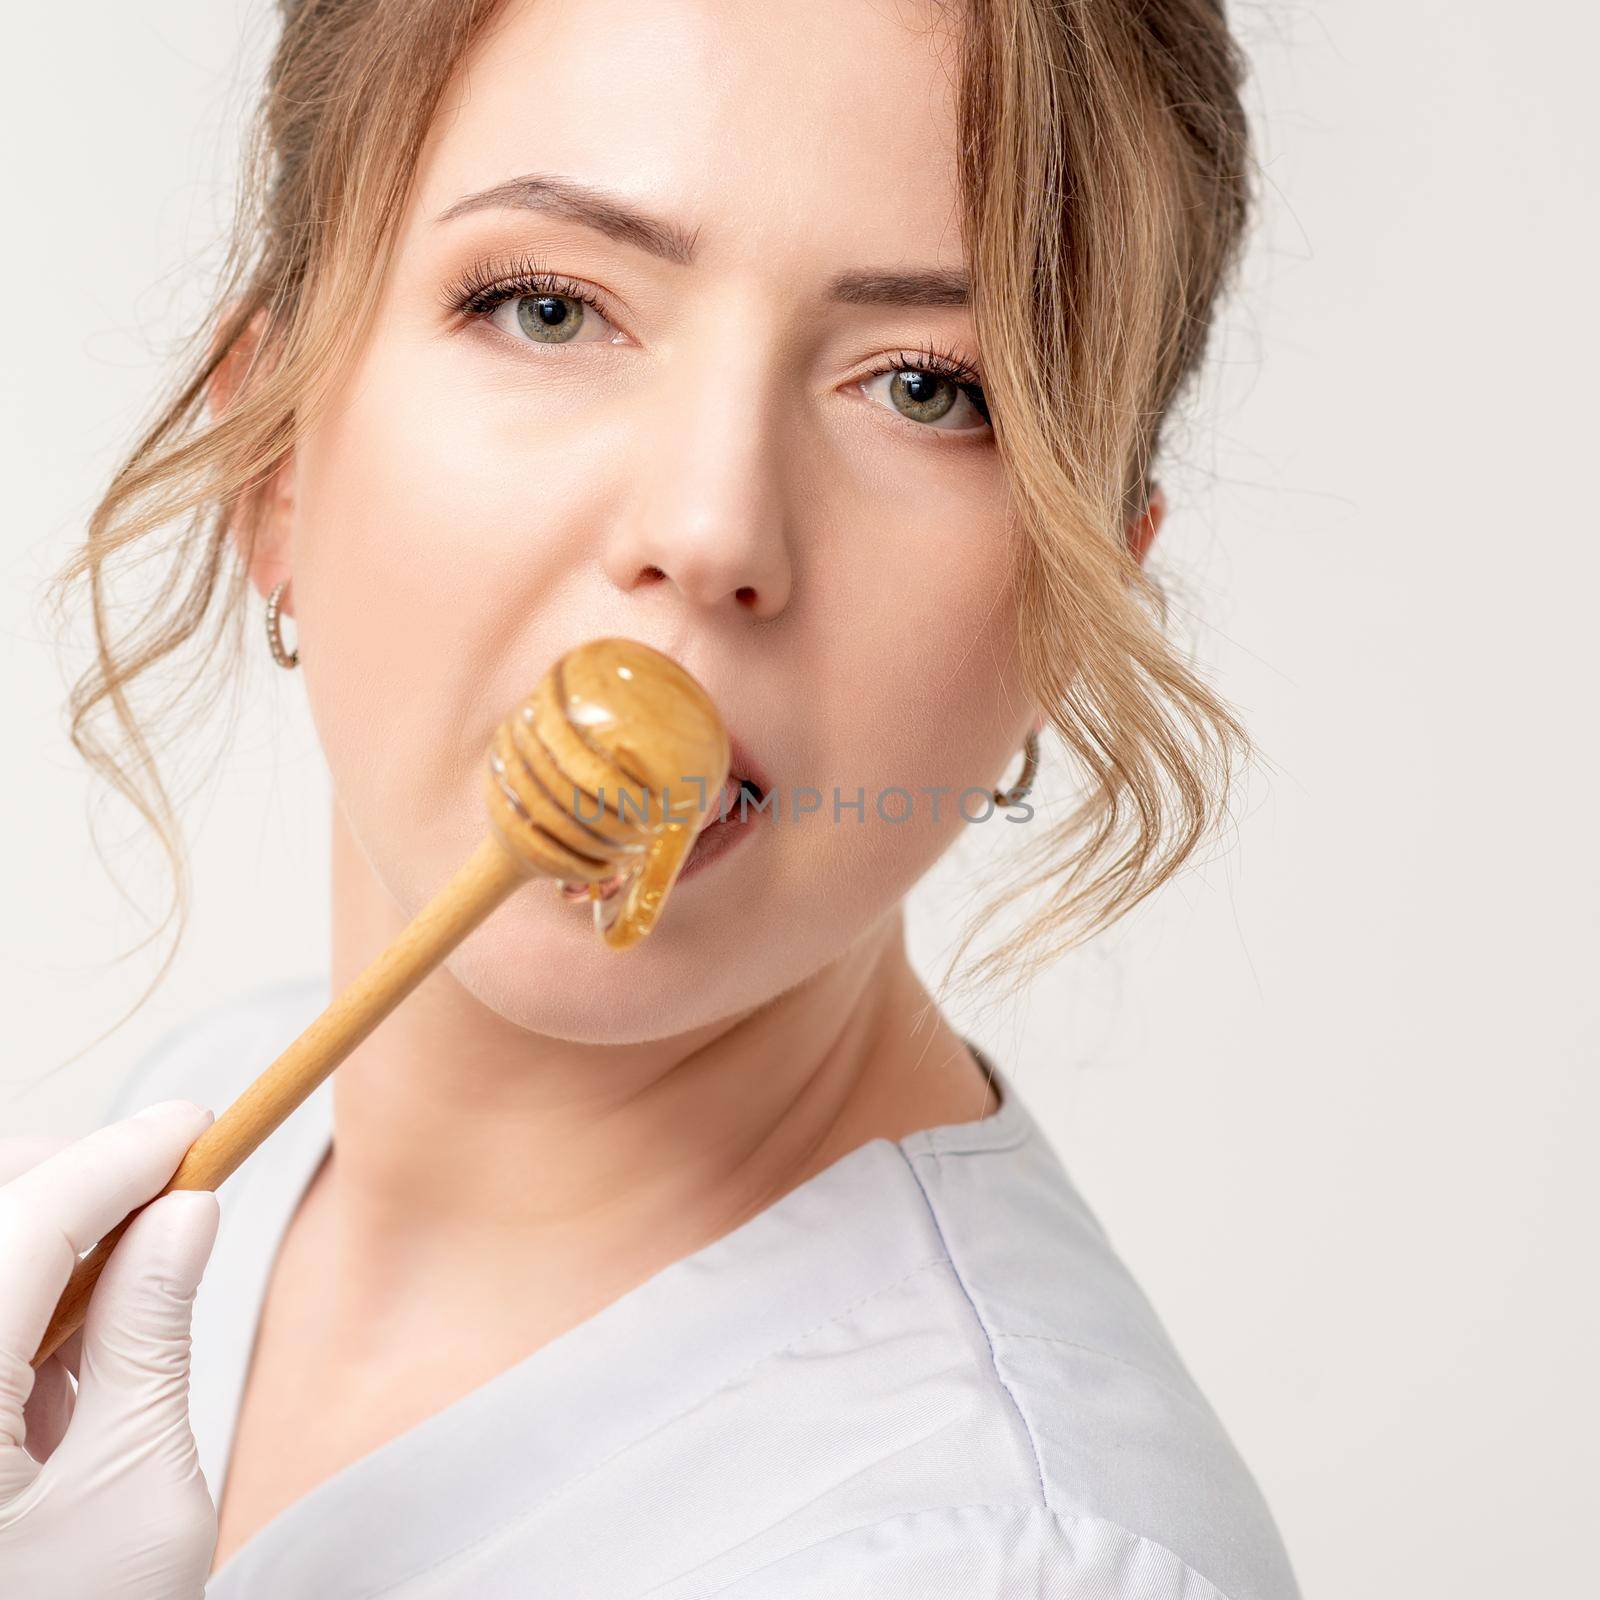 Woman eating honey with wooden spoon by okskukuruza